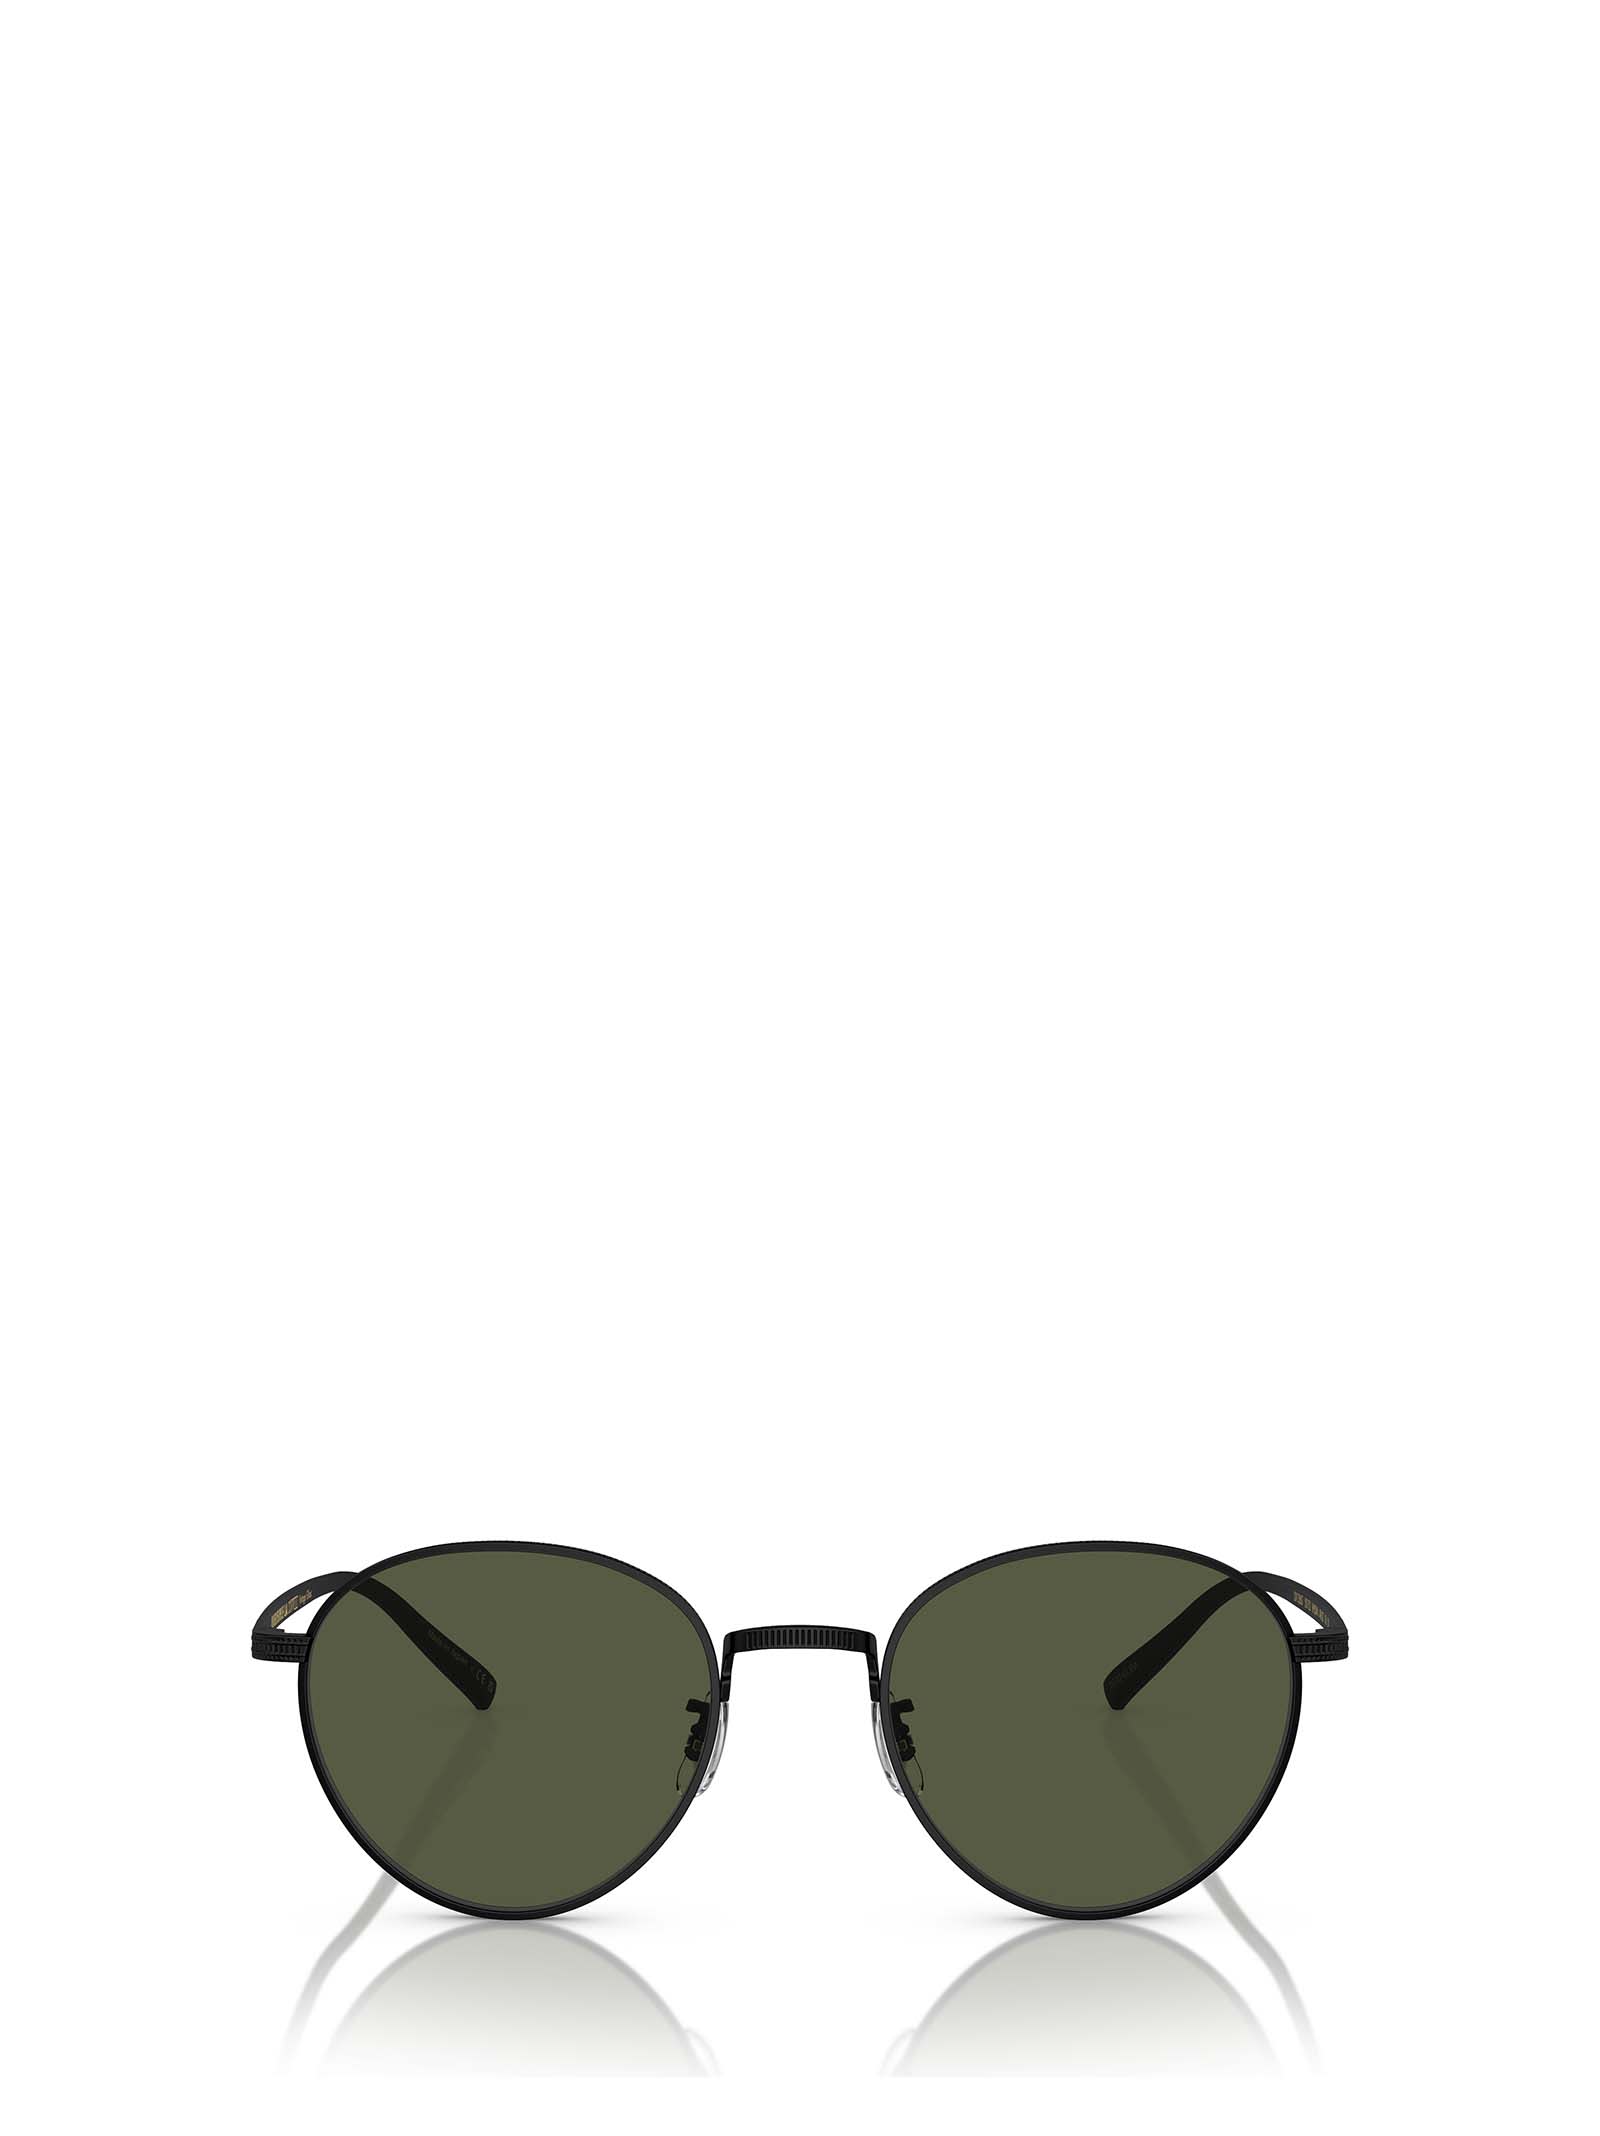 Ov1336st Matte Black Sunglasses